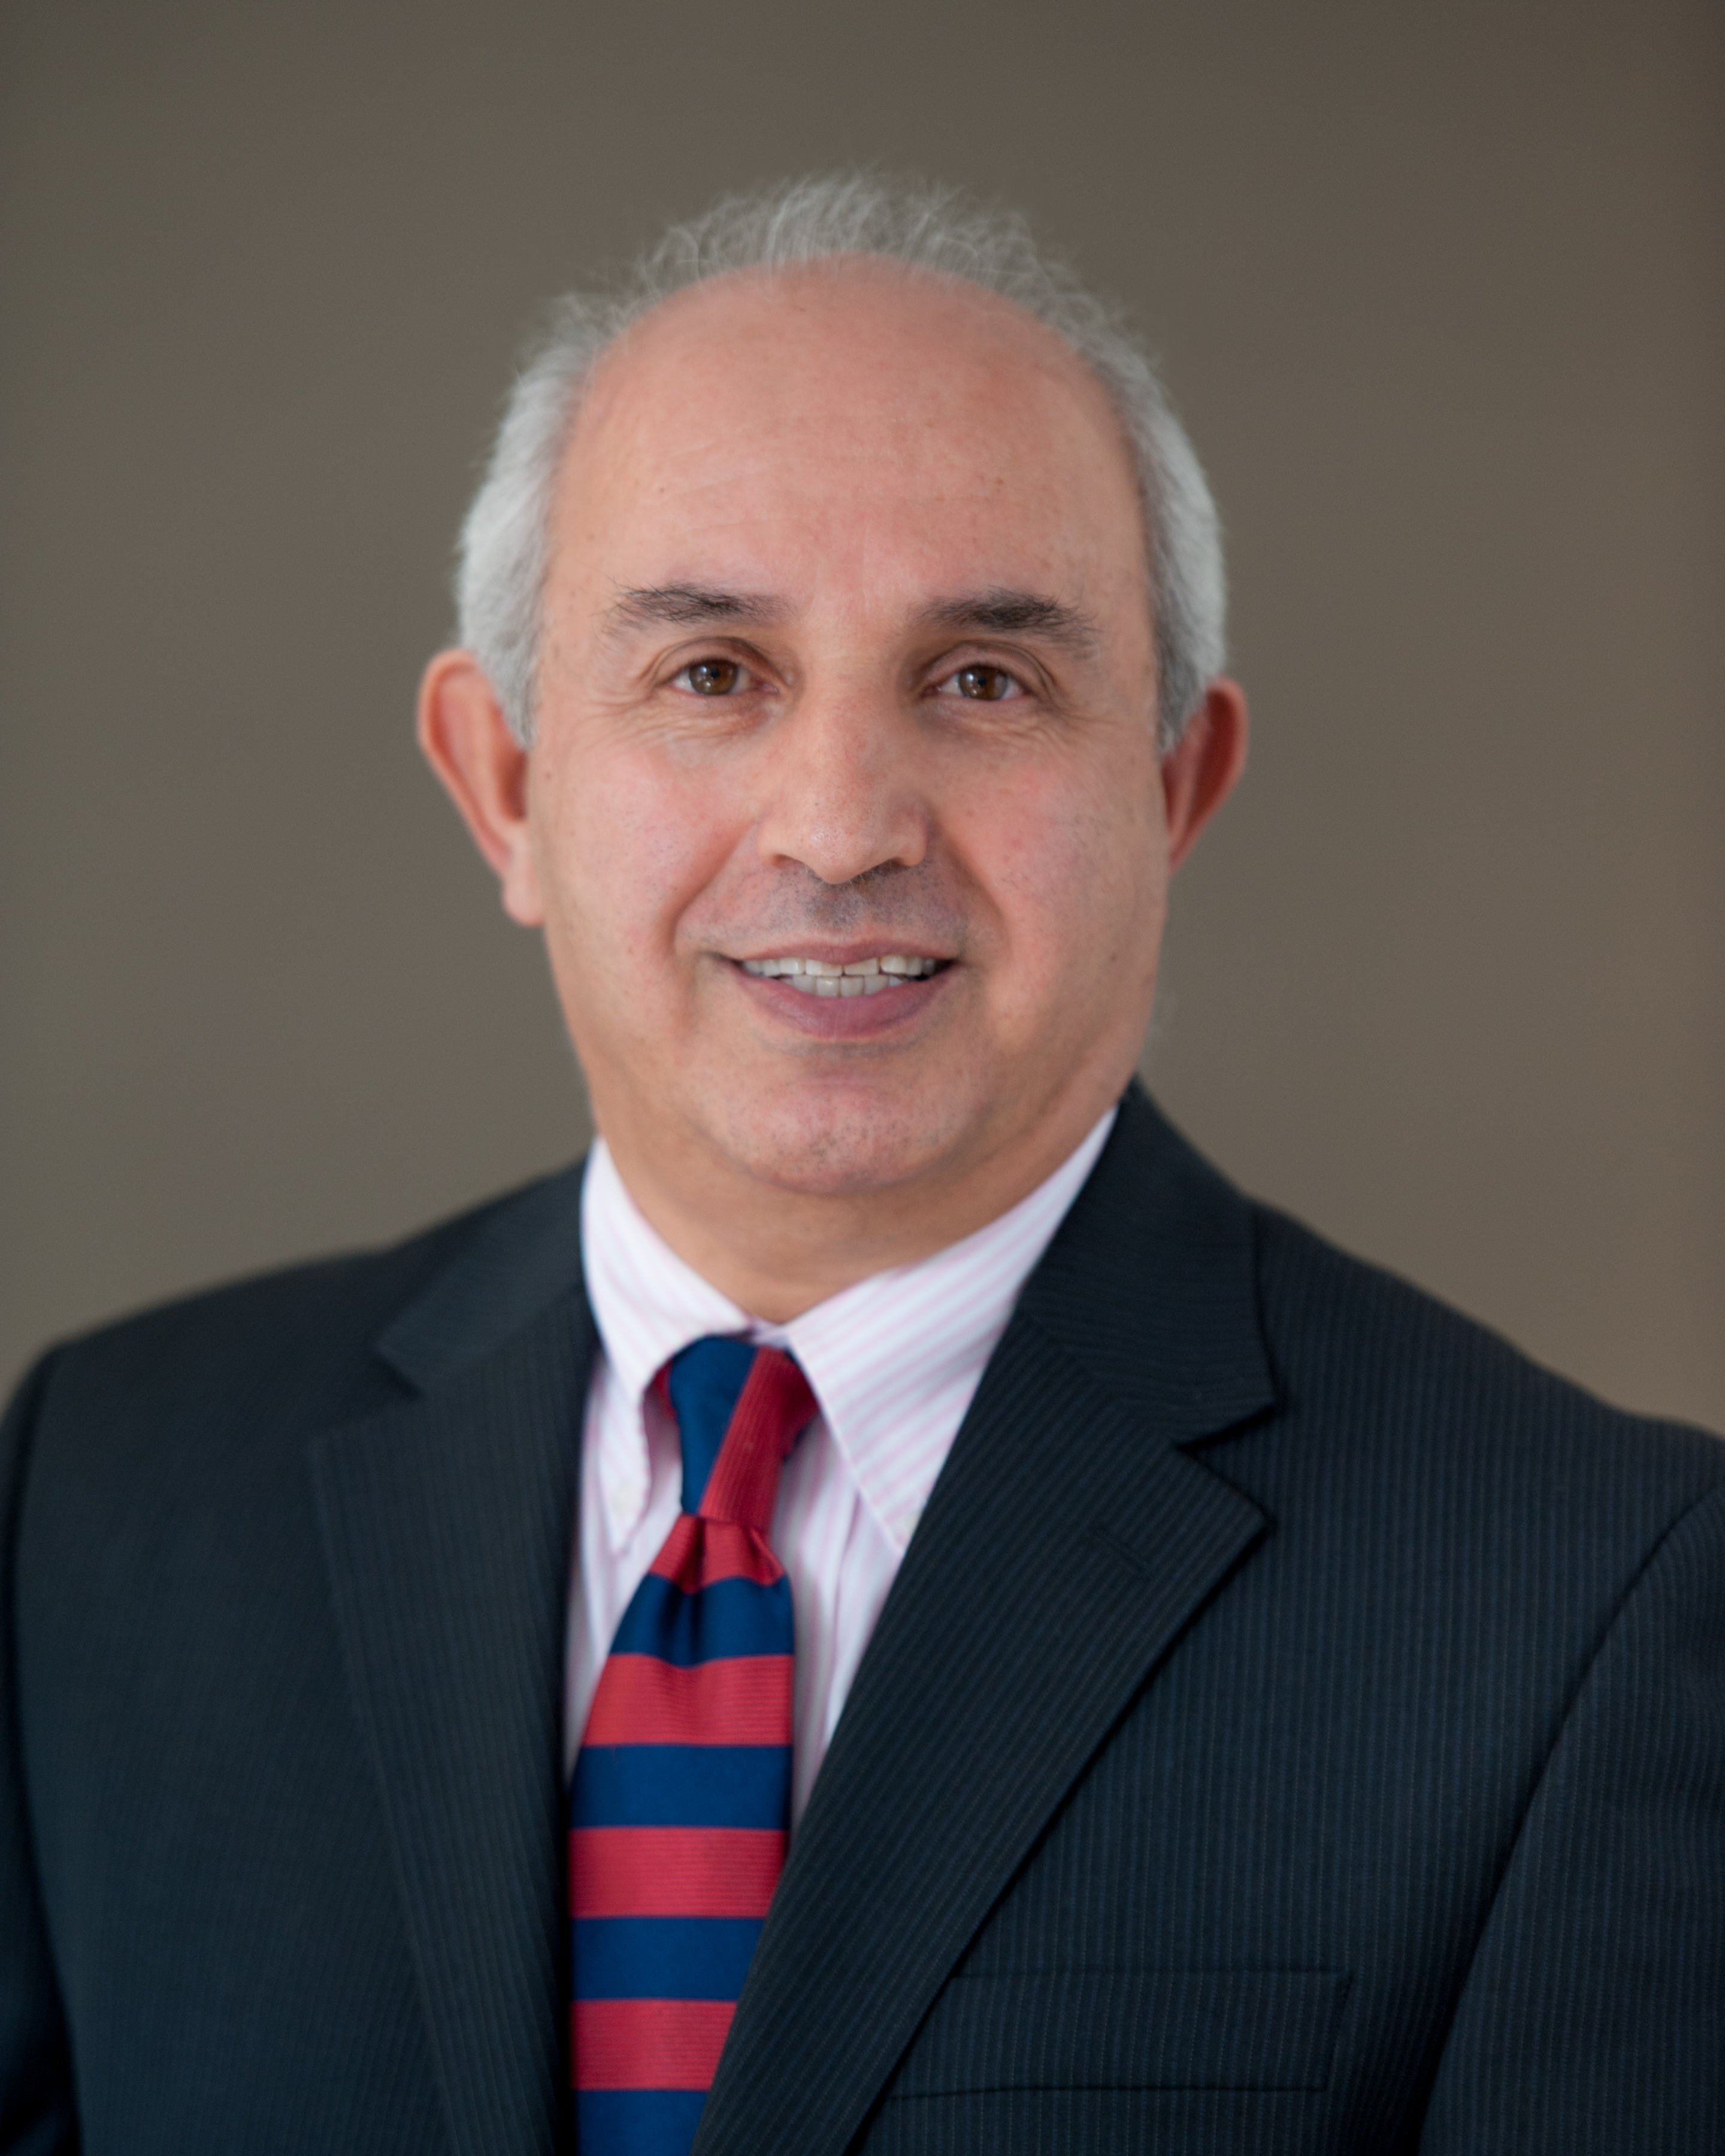 Professor Mansour Moussavi